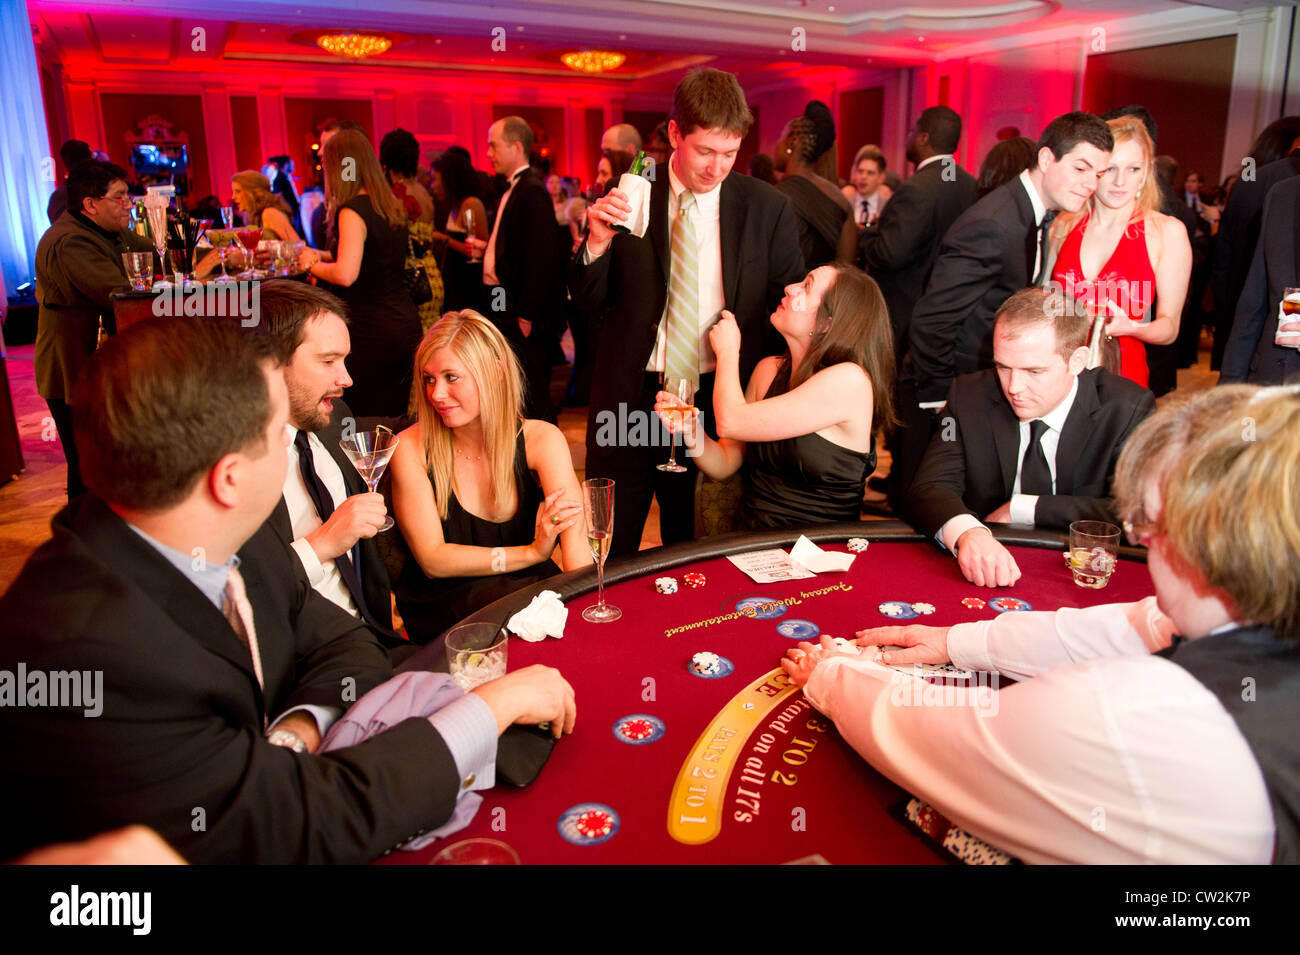 young-people-gambling-at-a-casino-CW2K7P.jpg